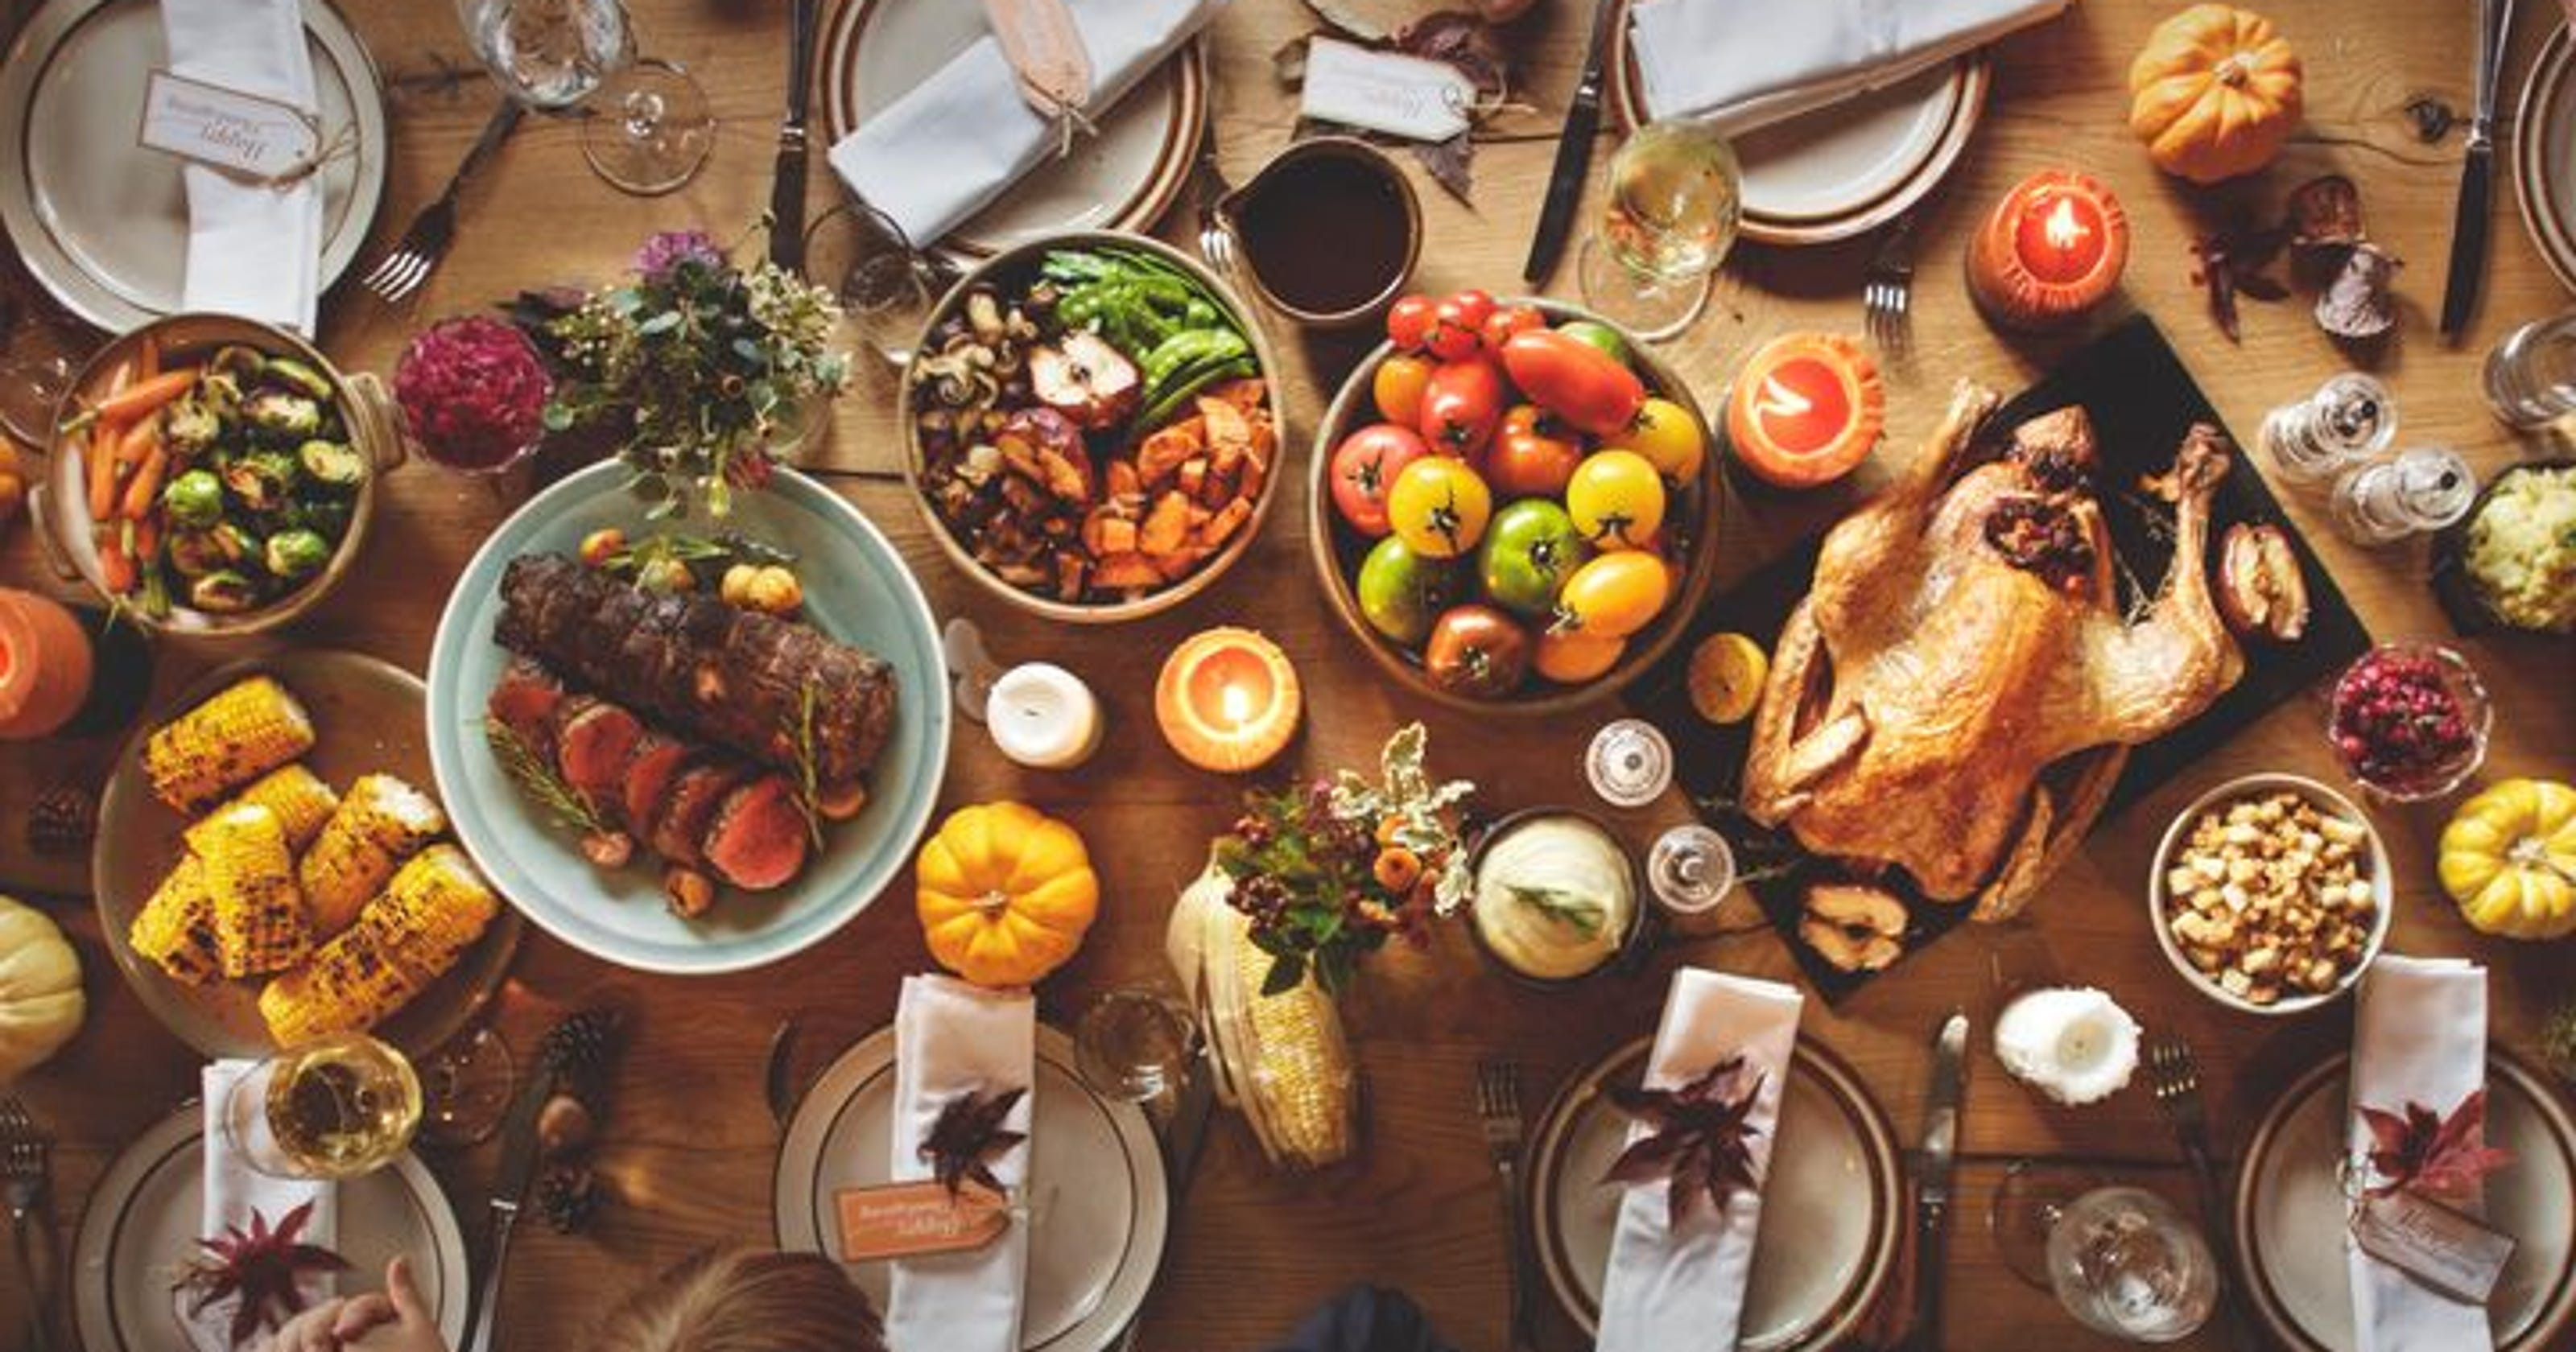 Krogers Thanksgiving Dinner 2019
 Thanksgiving dinner 2017 will be more affordable